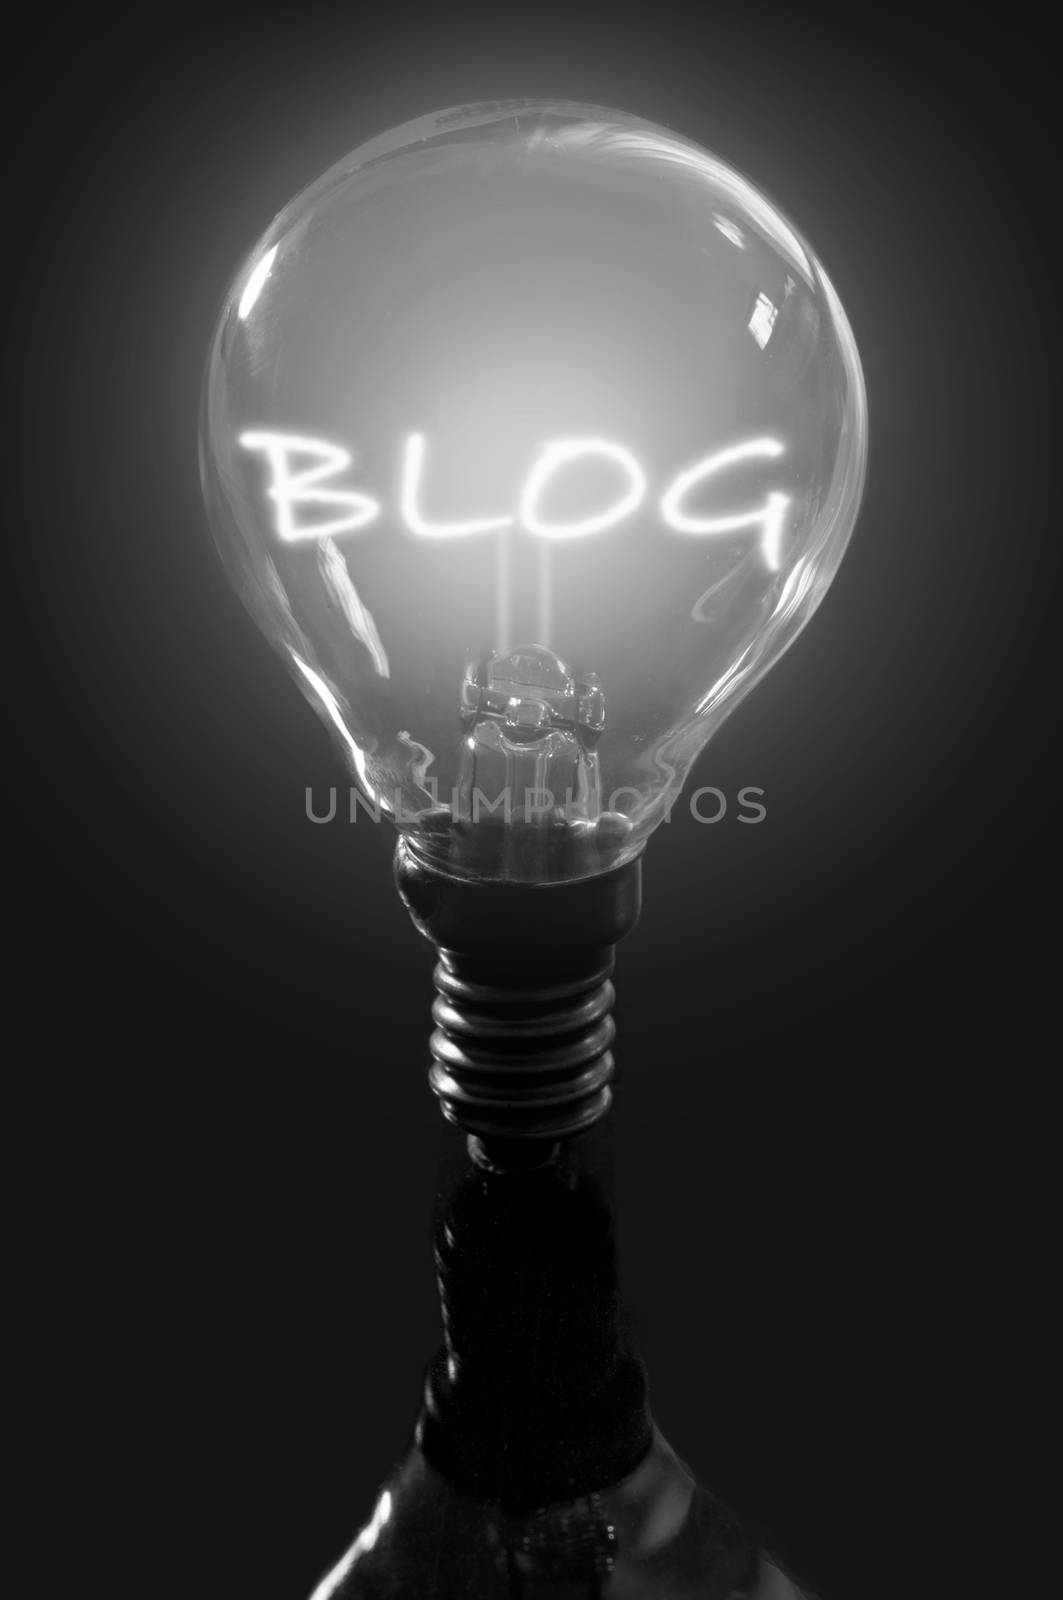 Blog lamp social media concept